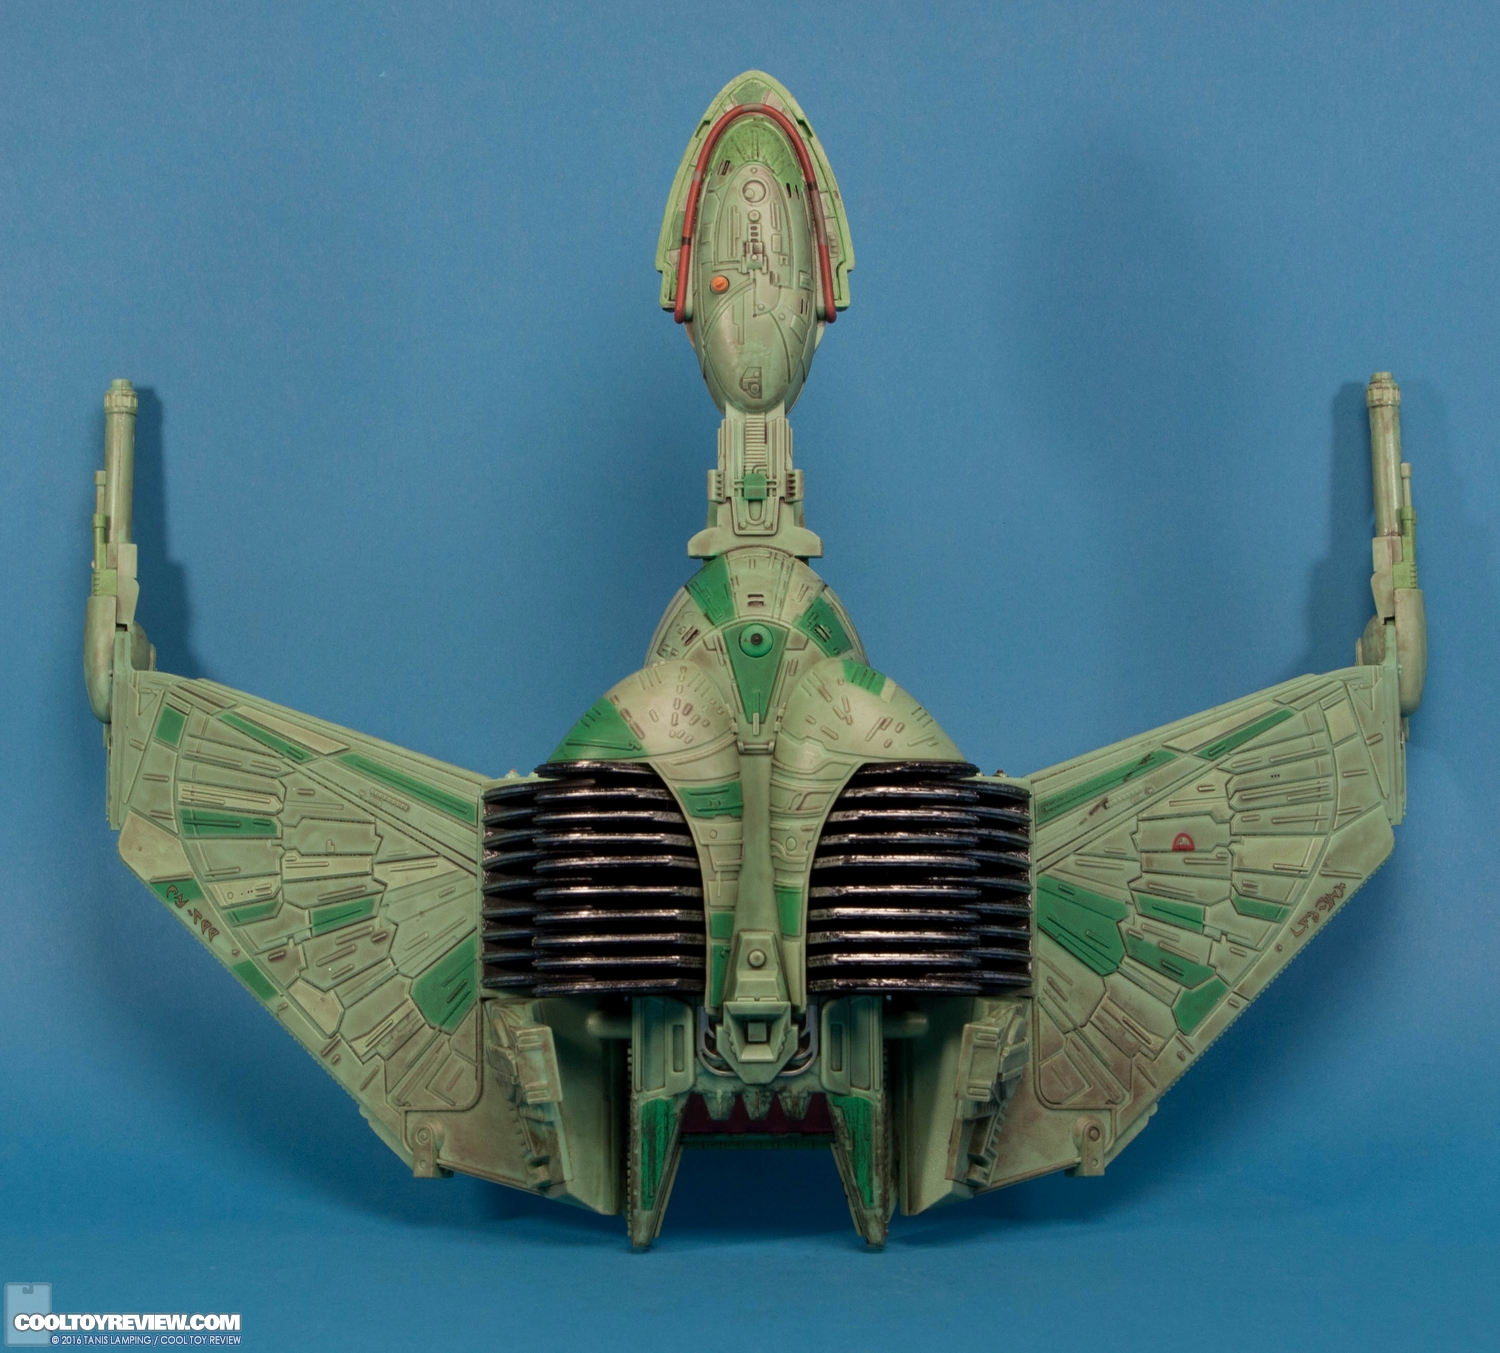 klingon-bird-of-prey-electronic-starship-diamond-select-toys-005.jpg